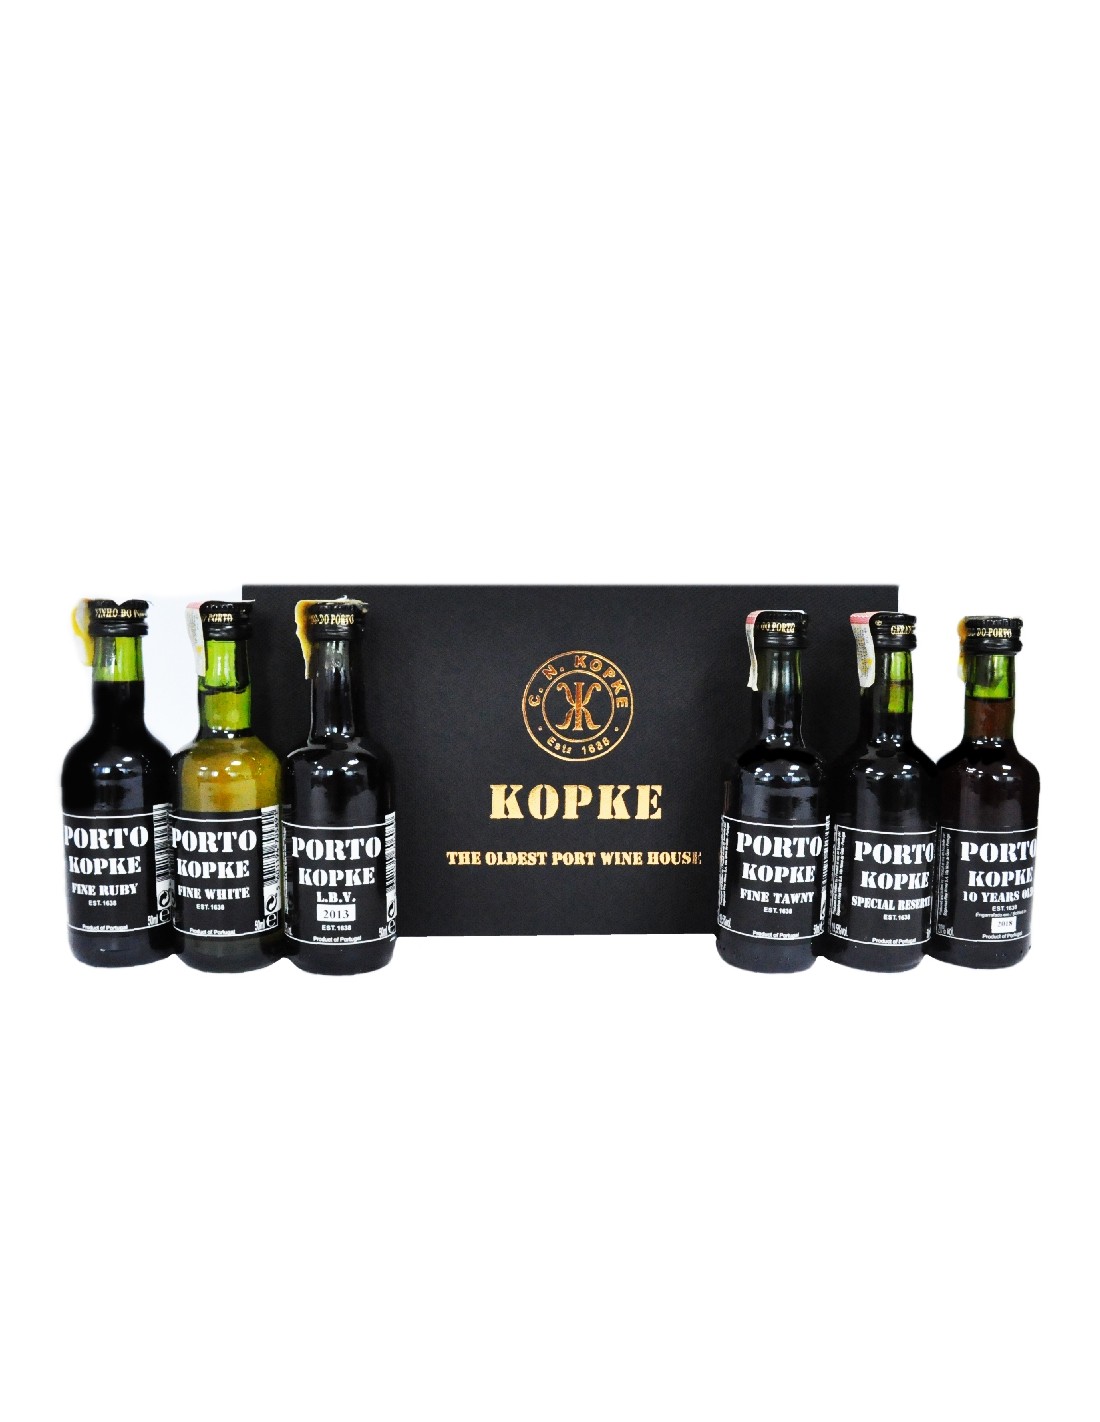 Vin porto Kopke, kit 6 miniaturi, 0.05L, 20% alc., Portugalia alcooldiscount.ro